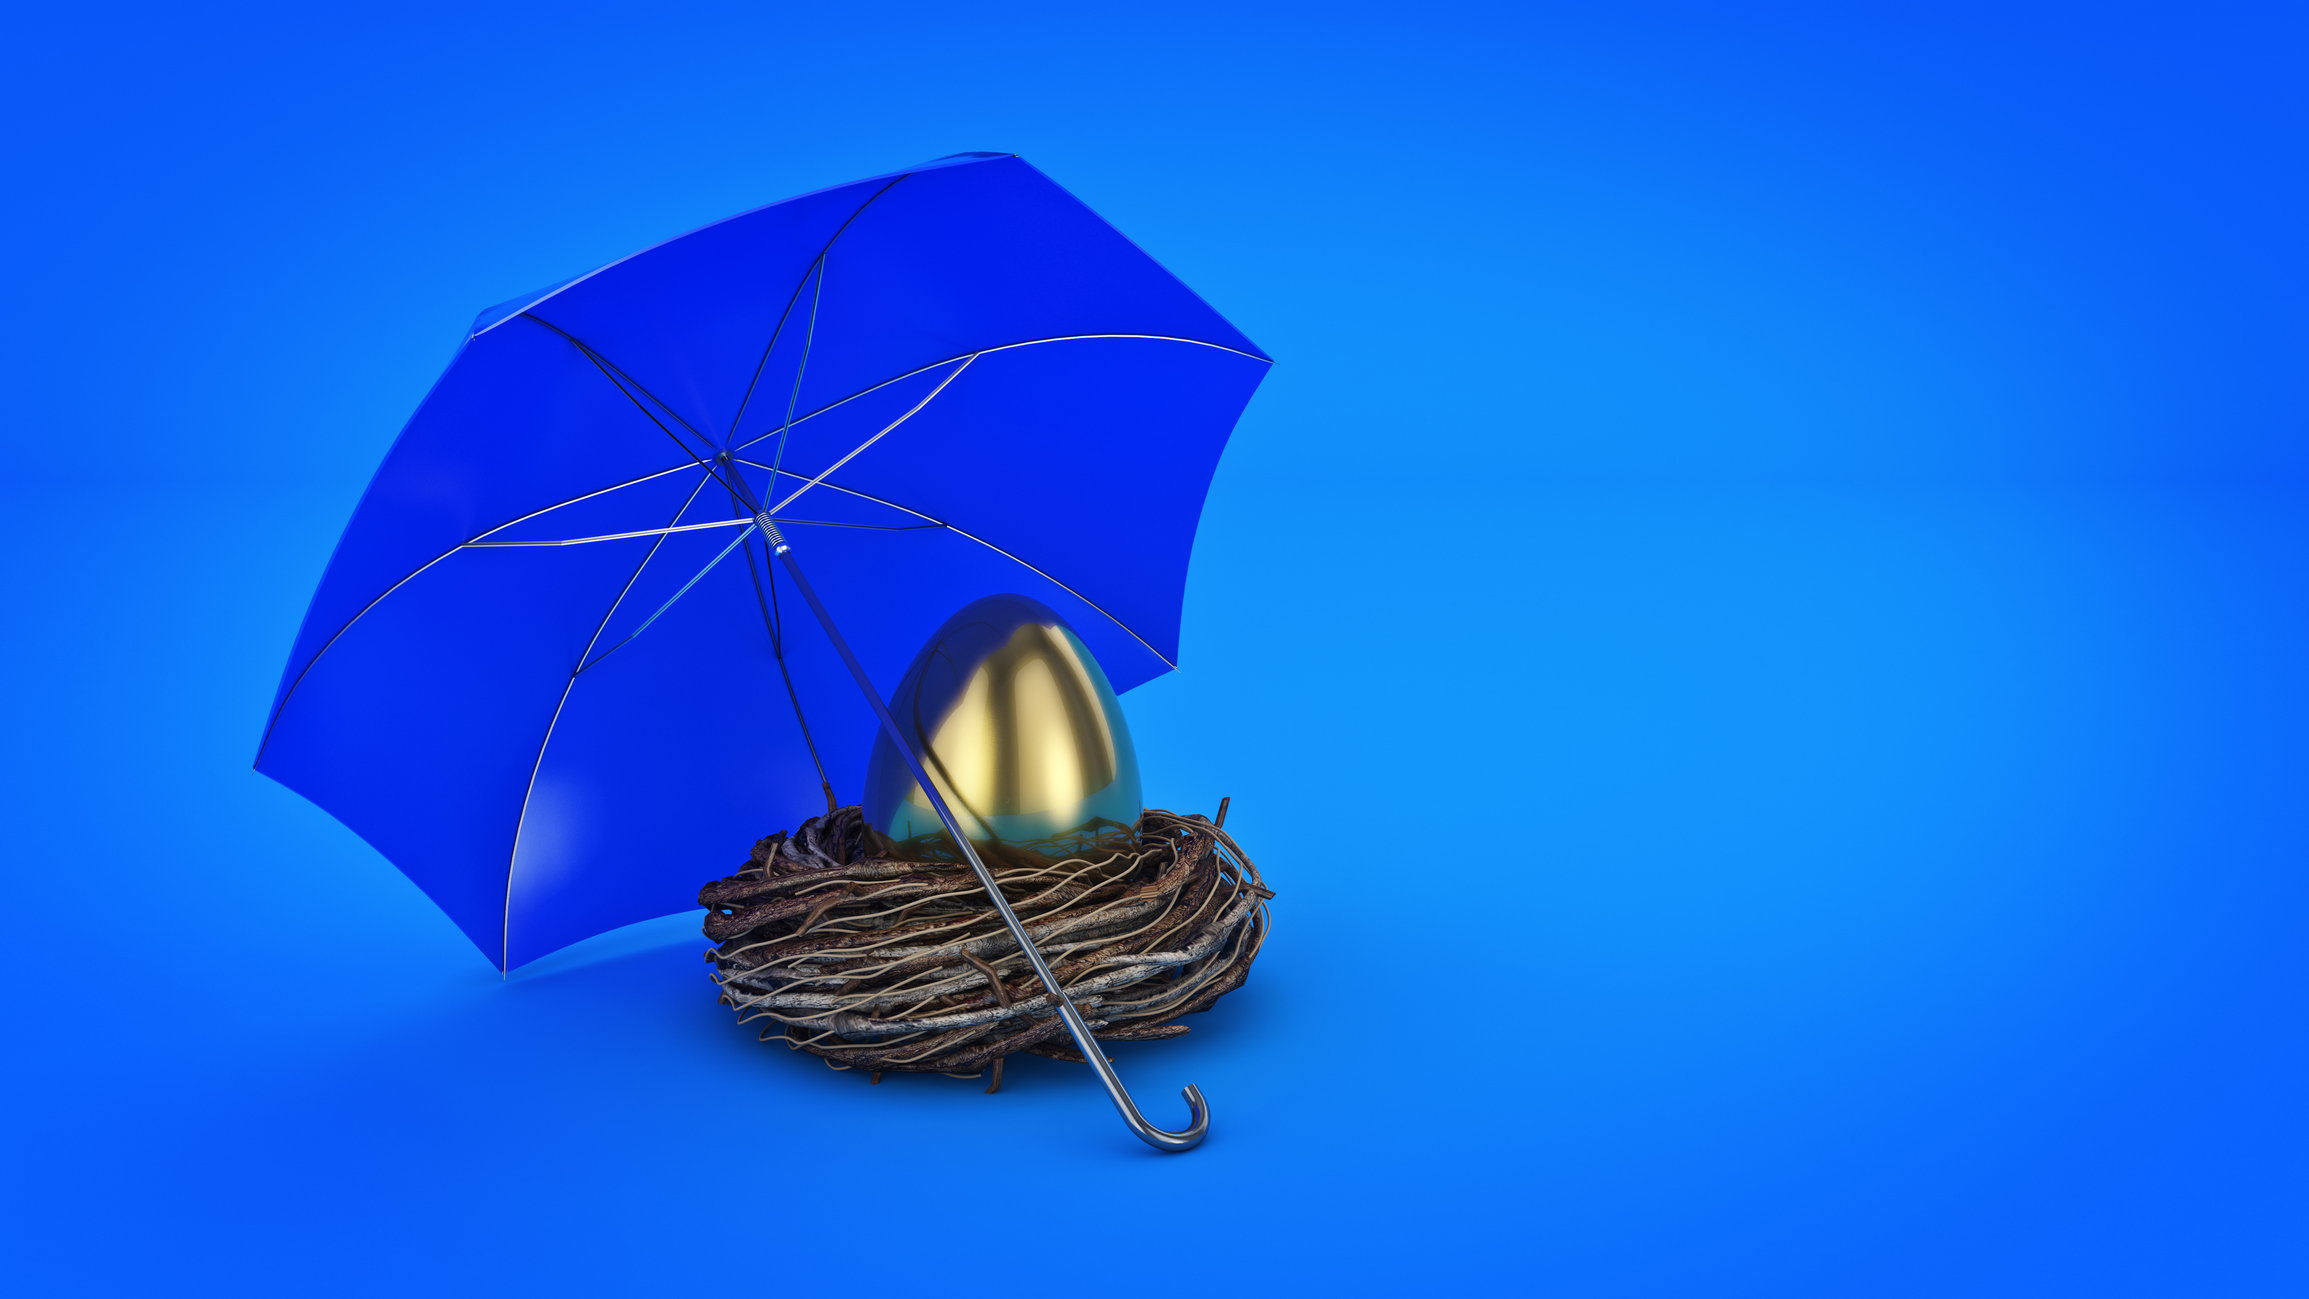 Golden nest egg with a blue umbrella